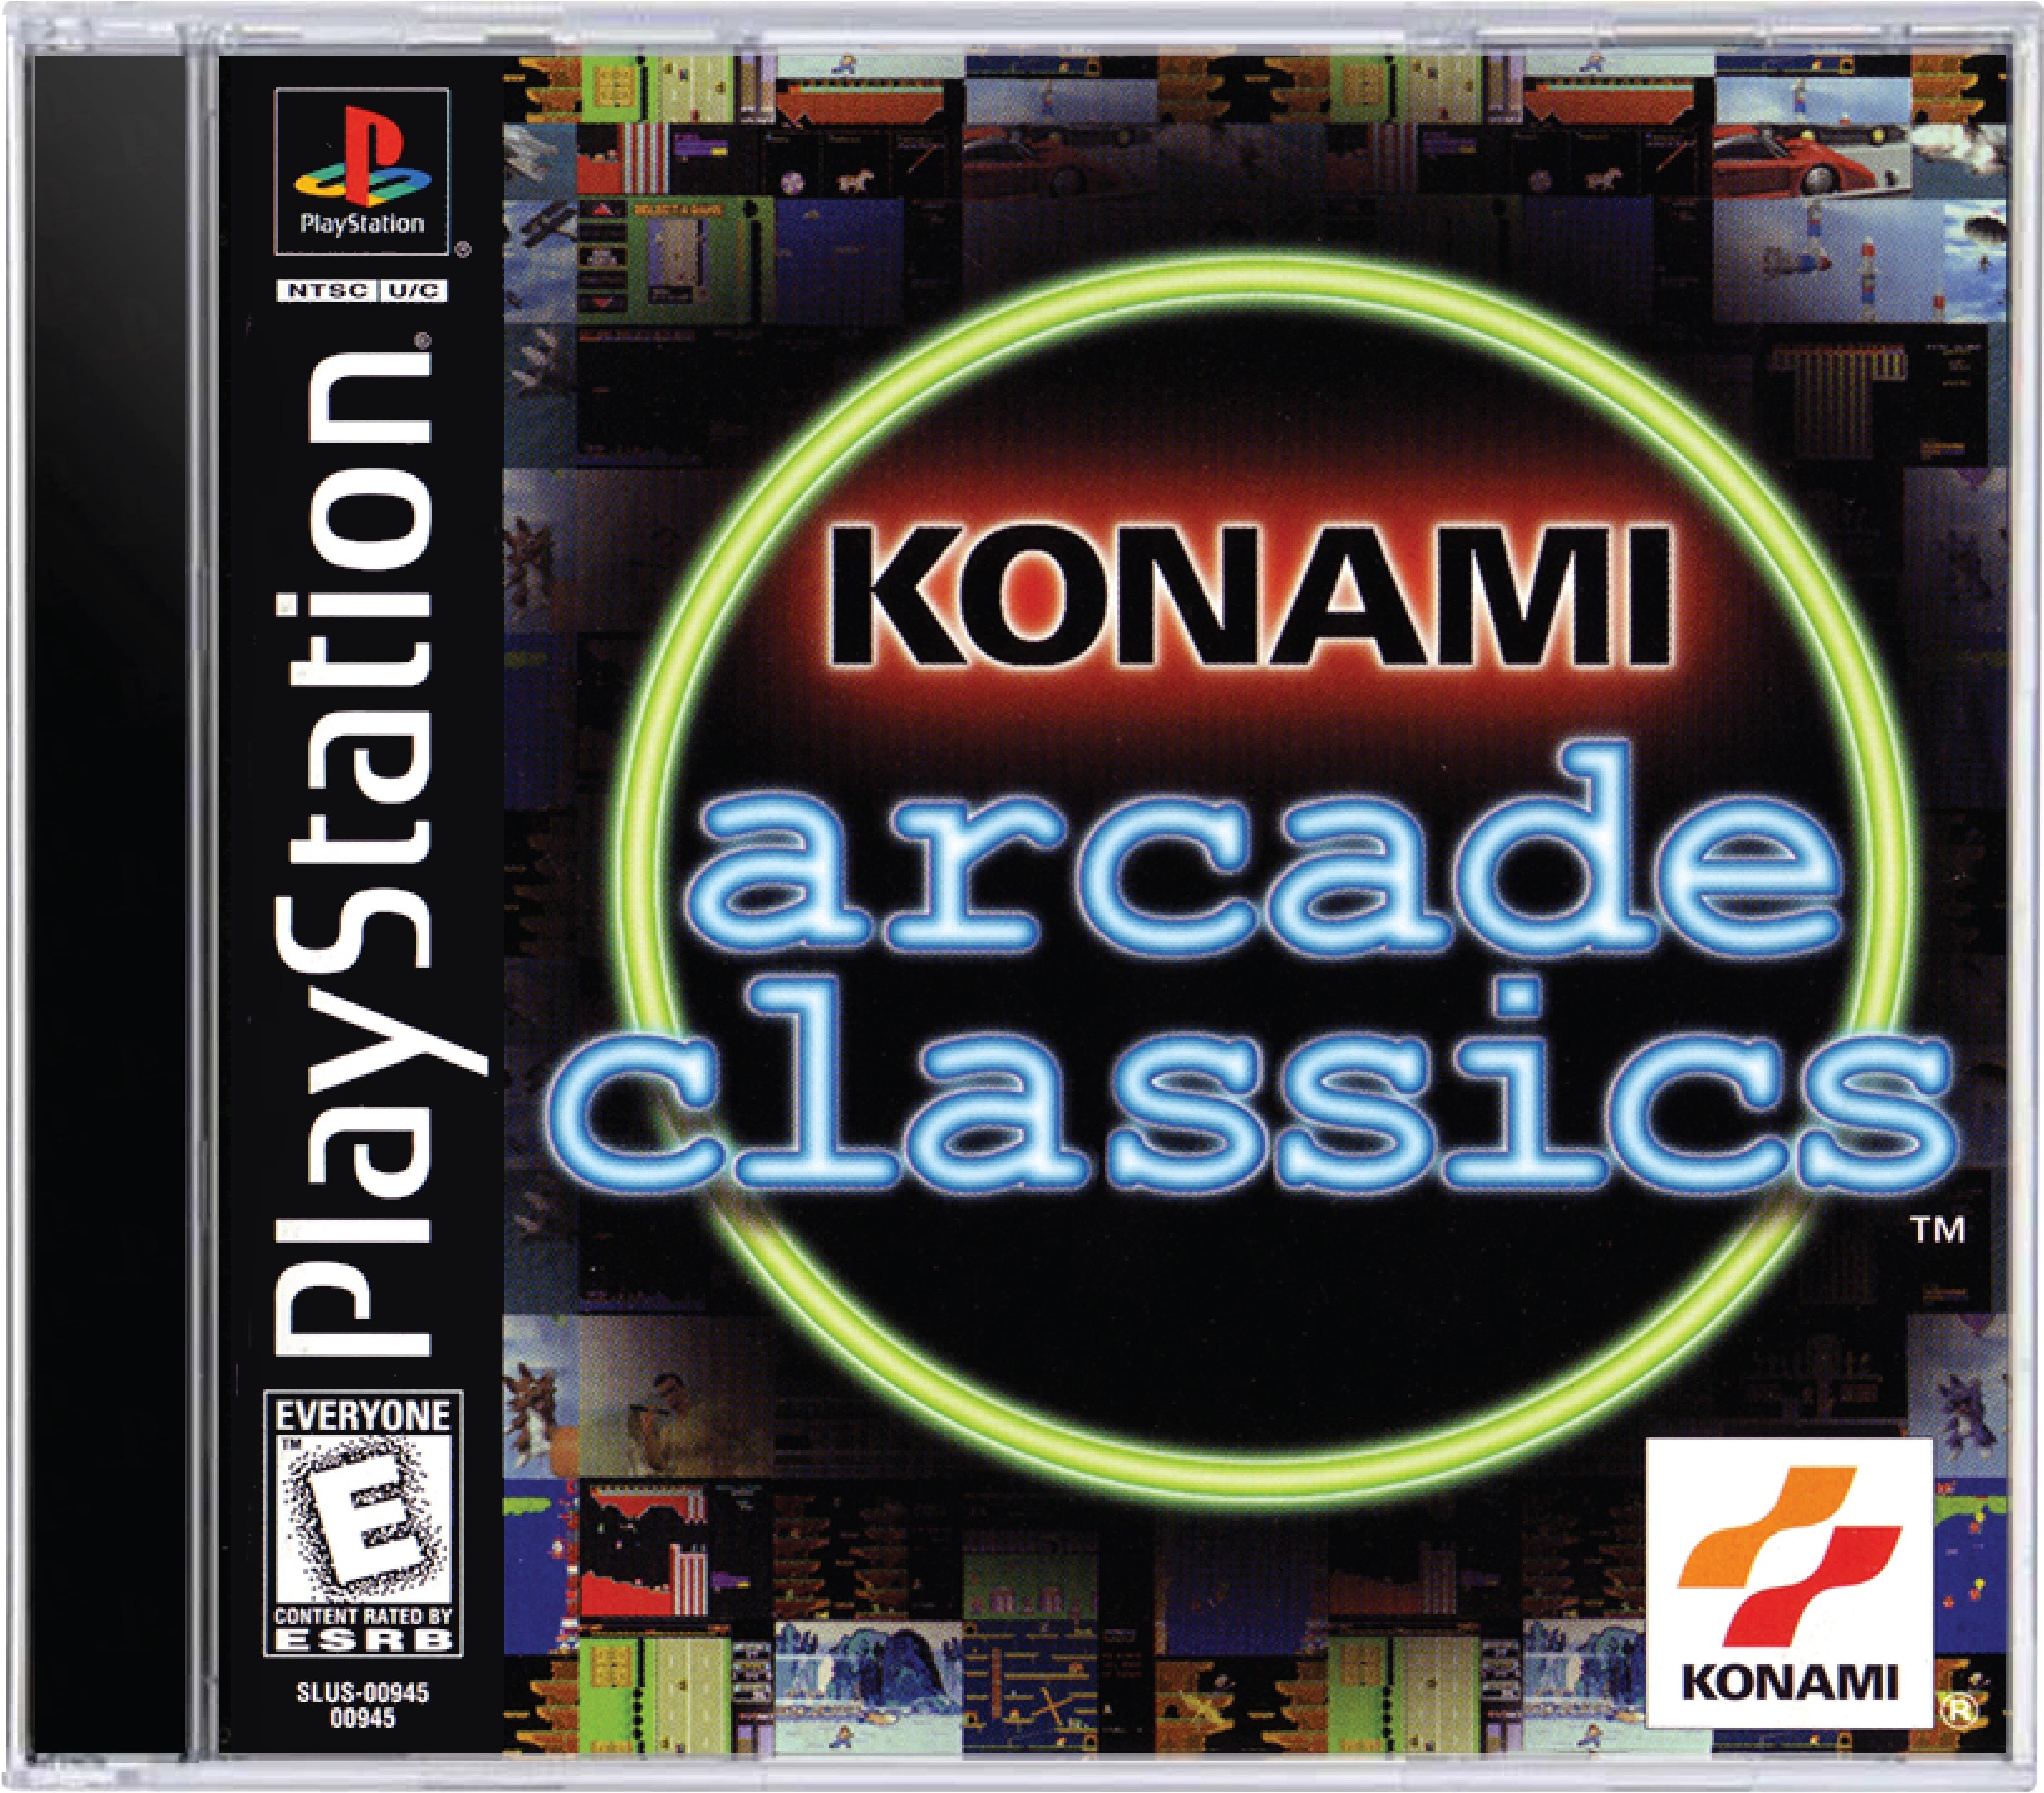 Konami Arcade Classics Cover Art and Product Photo